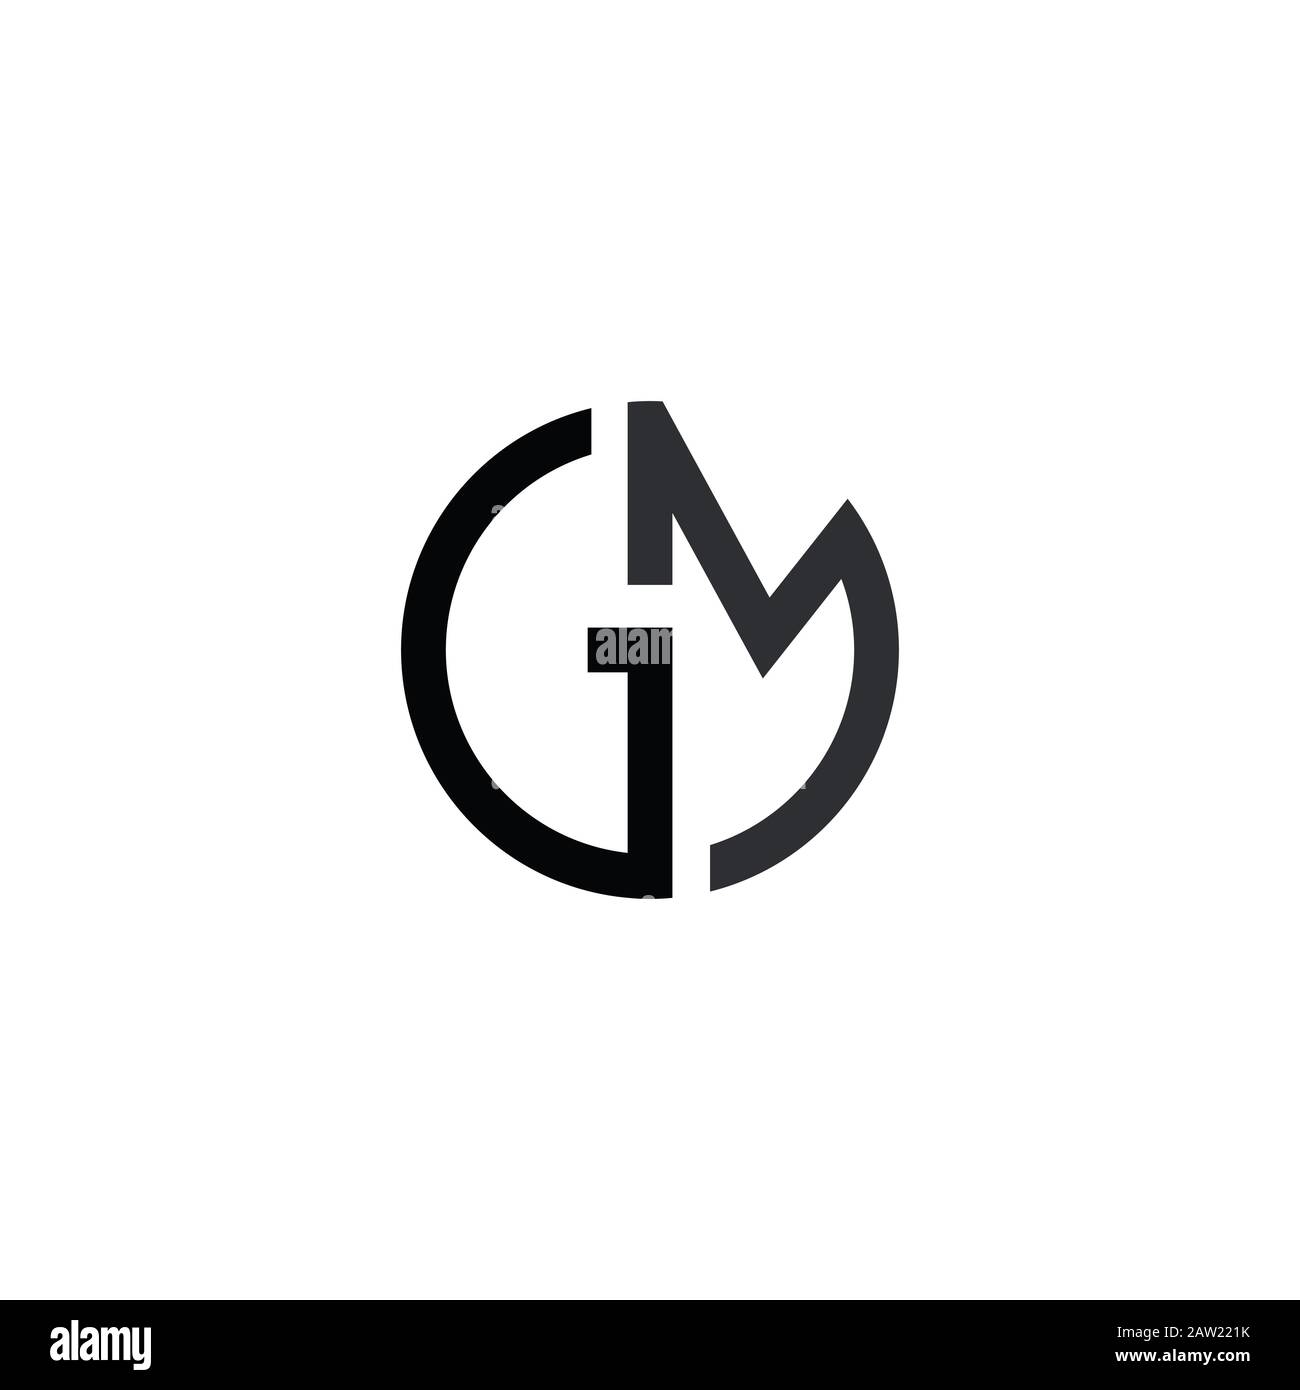 Free: Initial monogram letter mg gm logo design vector image 